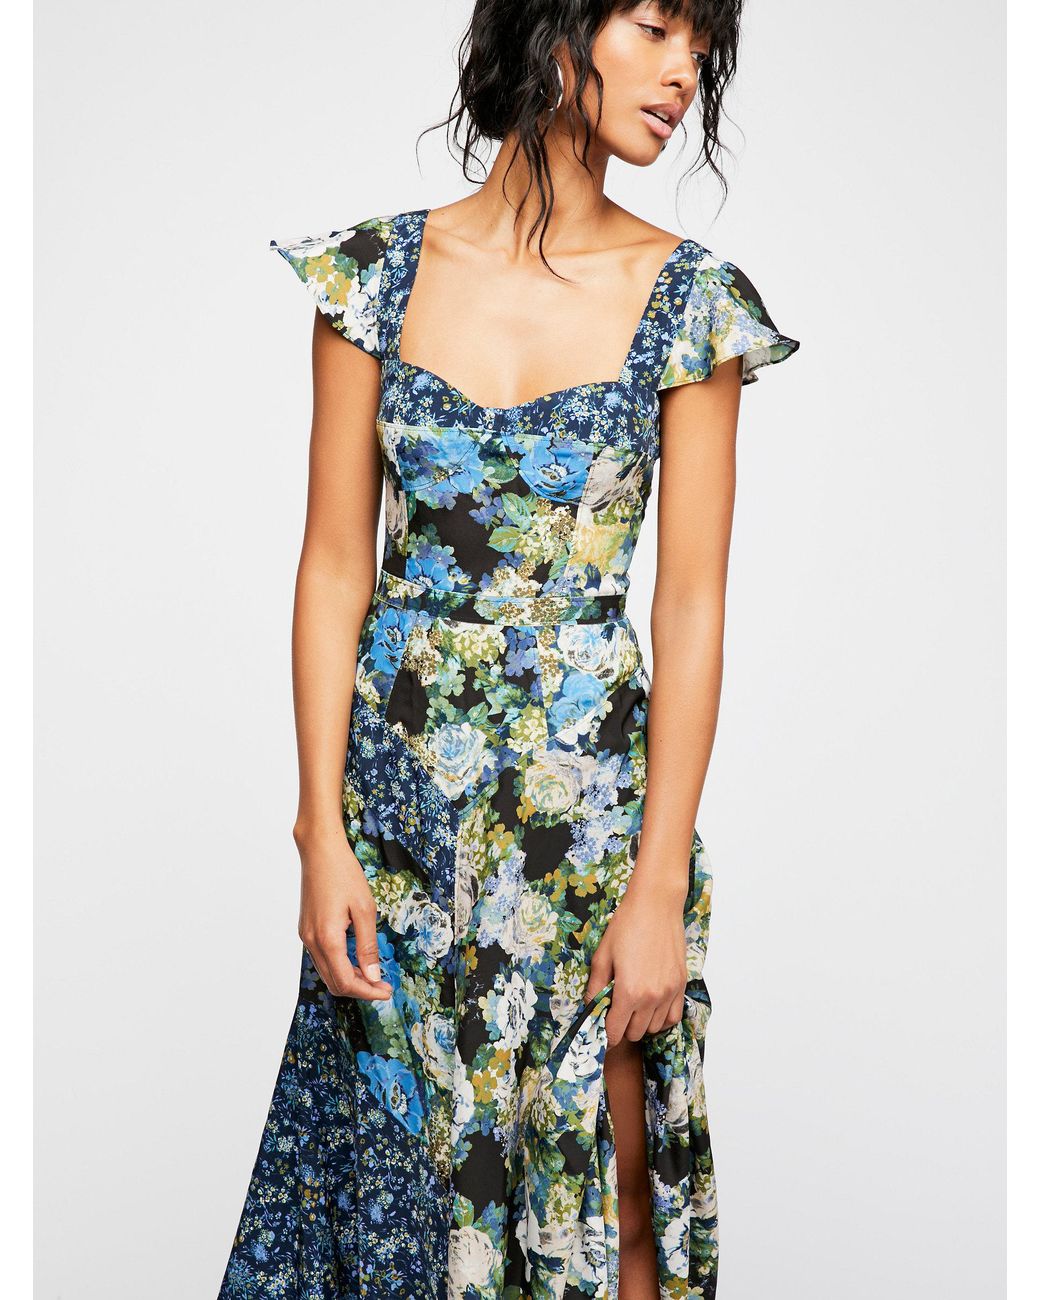 NWT $250 FREE PEOPLE La Fleur Maxi Floral  Dress ☮  Size 4 